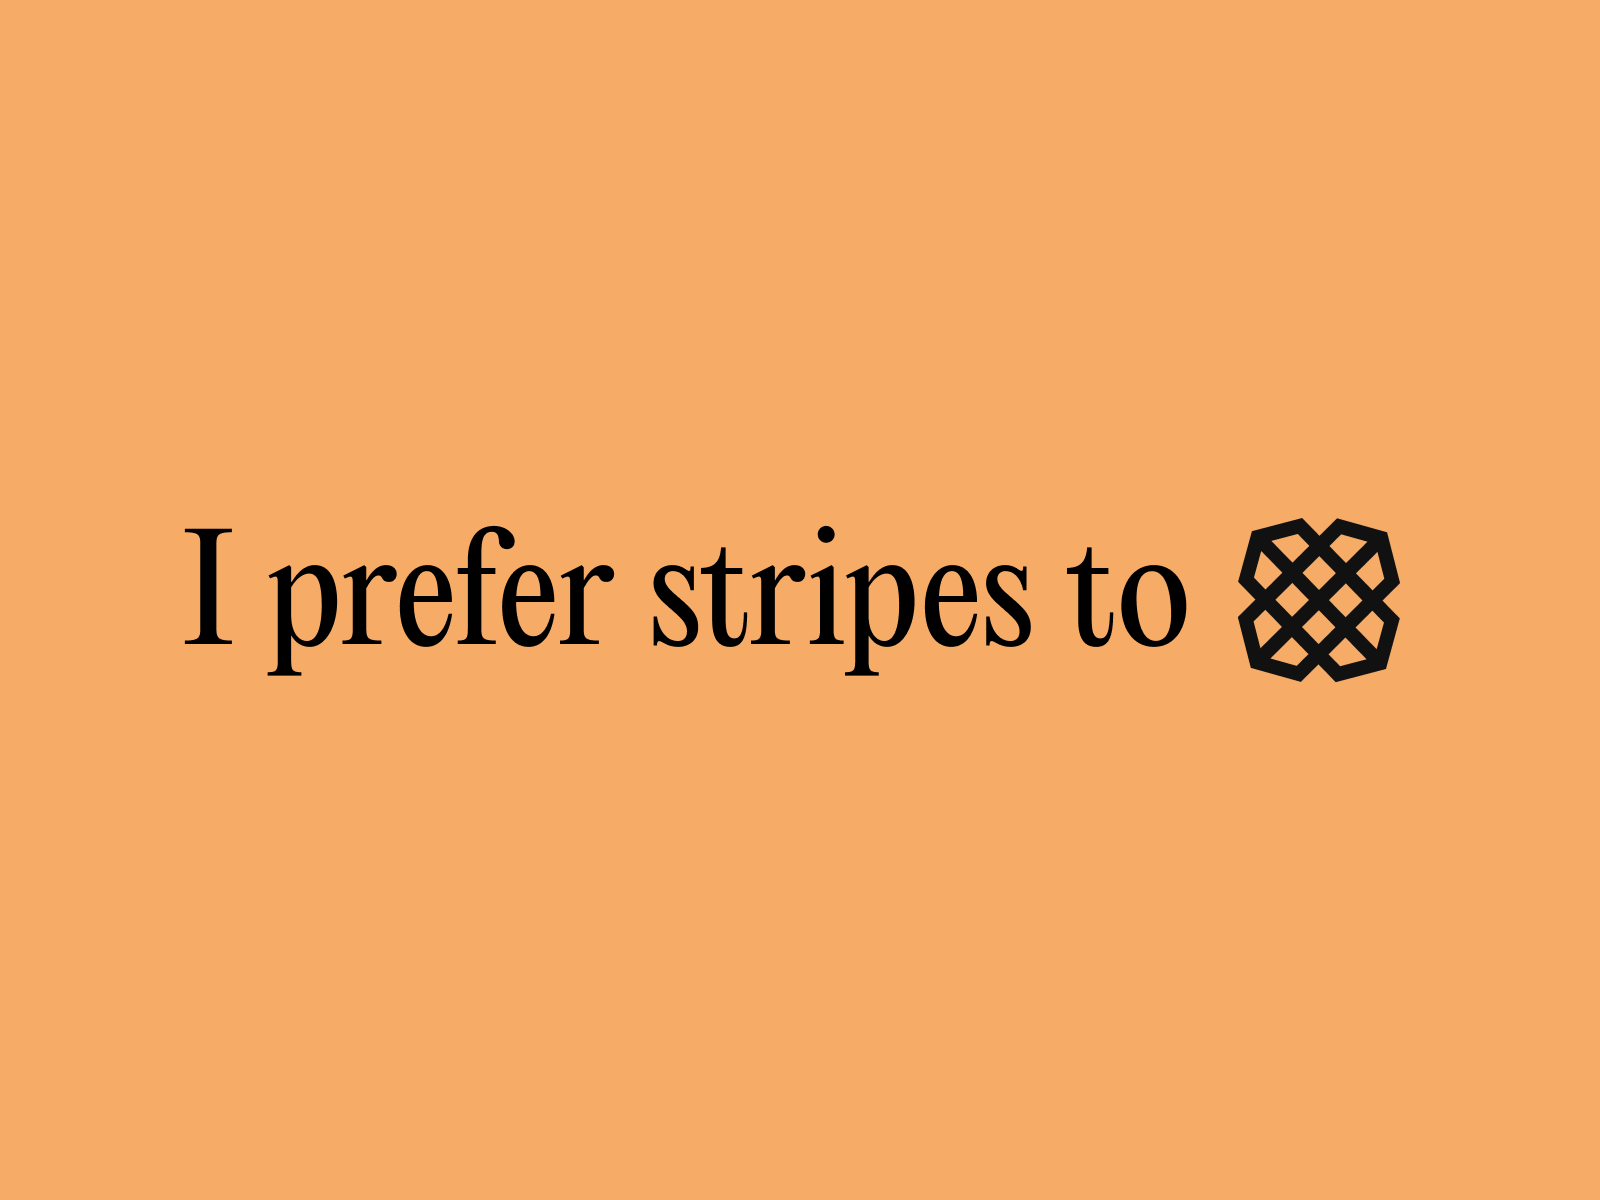 i prefer stripes to plaid